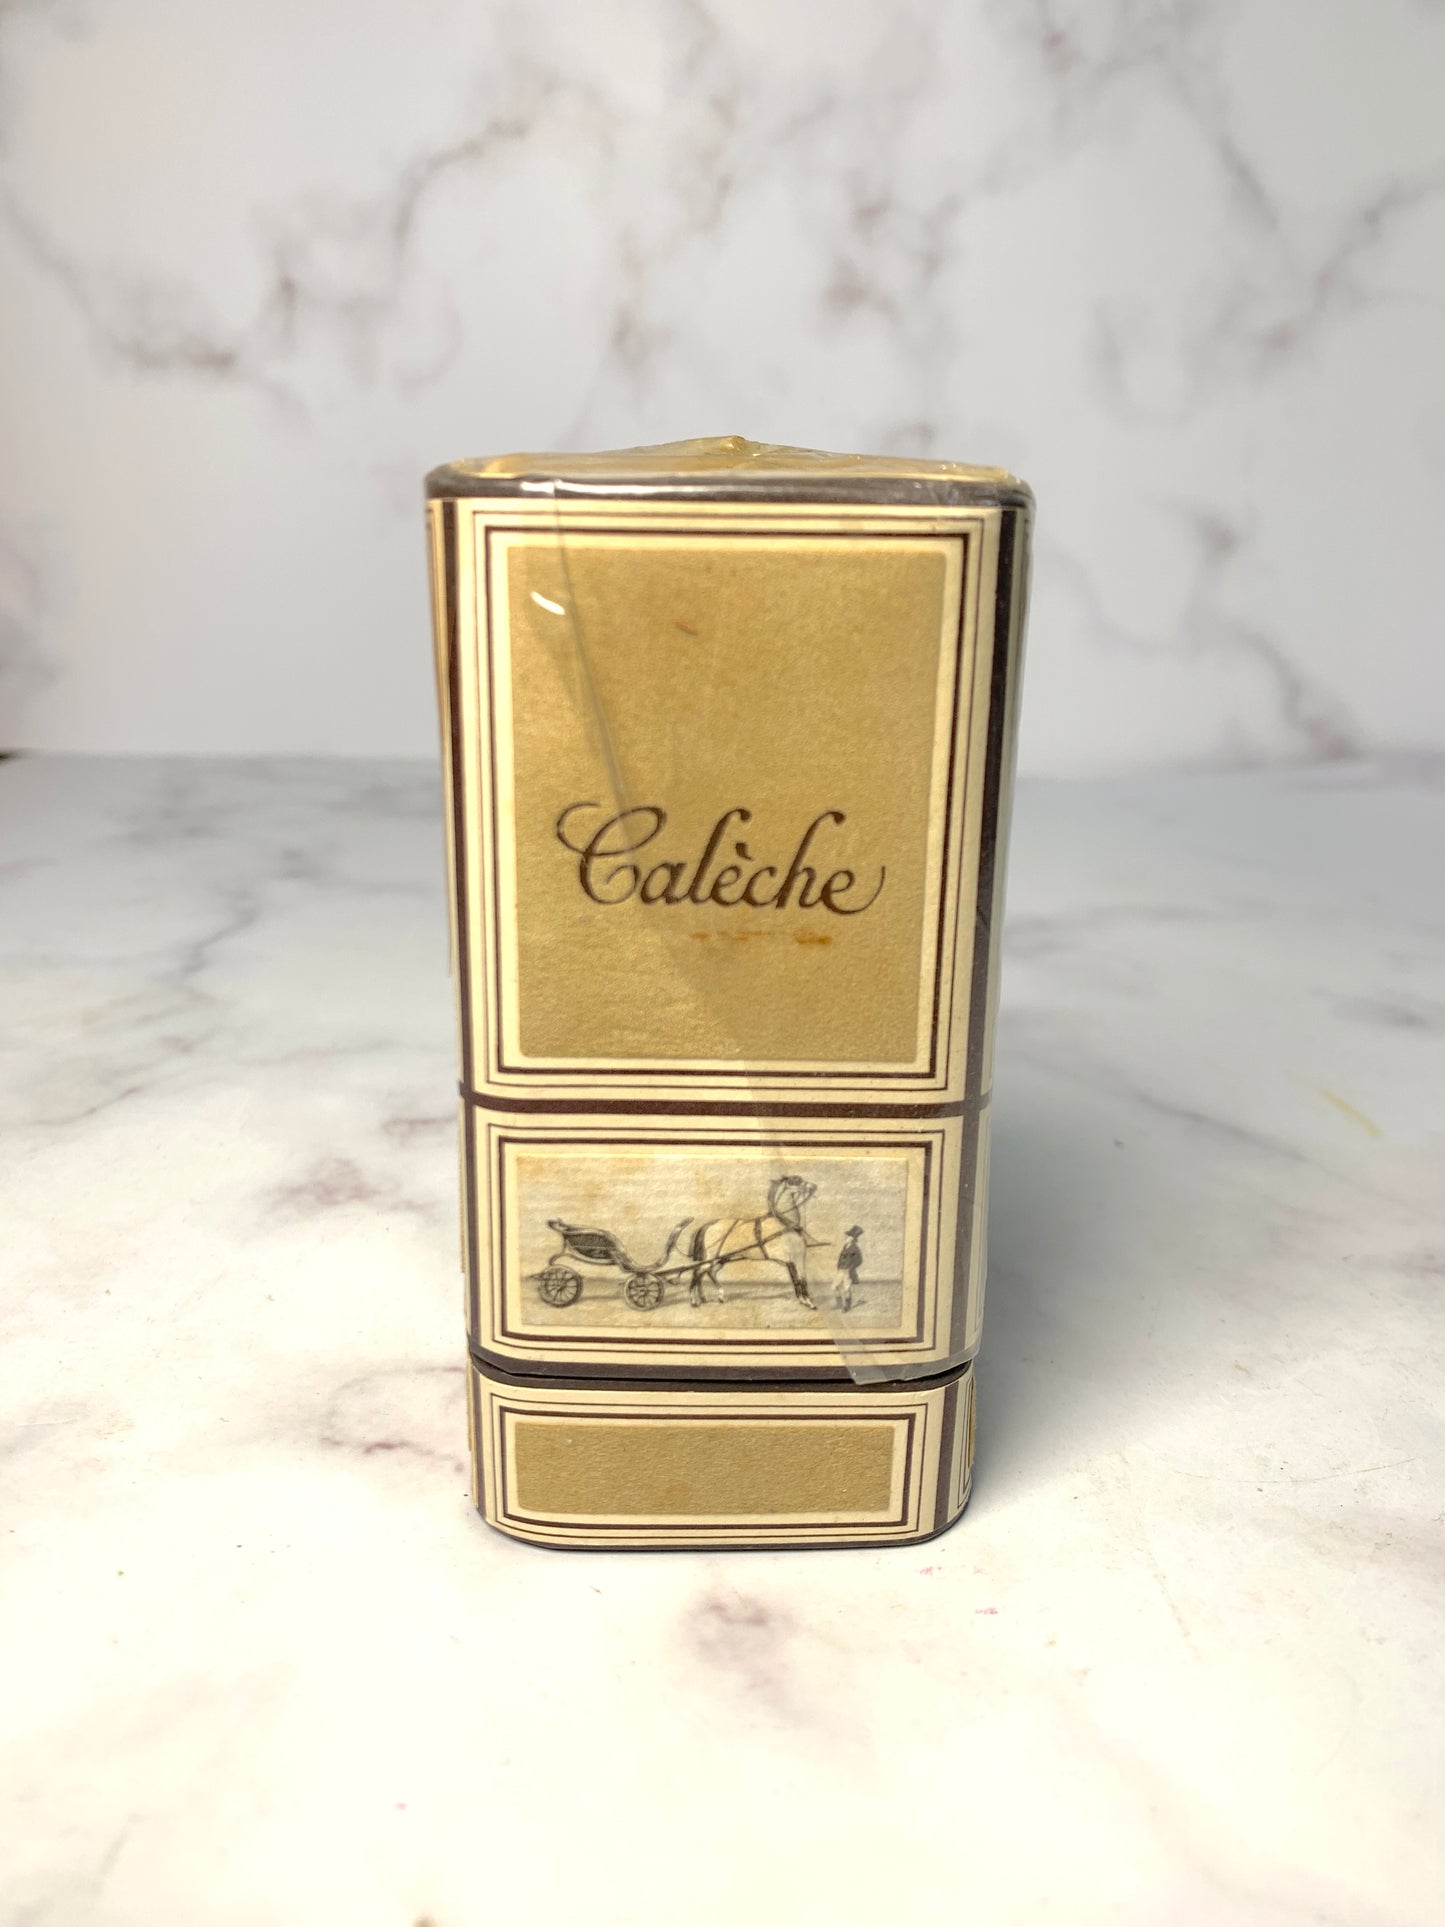 Rare Hermes Caleche  Parfum 15ml 1/2 oz Perfume with box - 030124